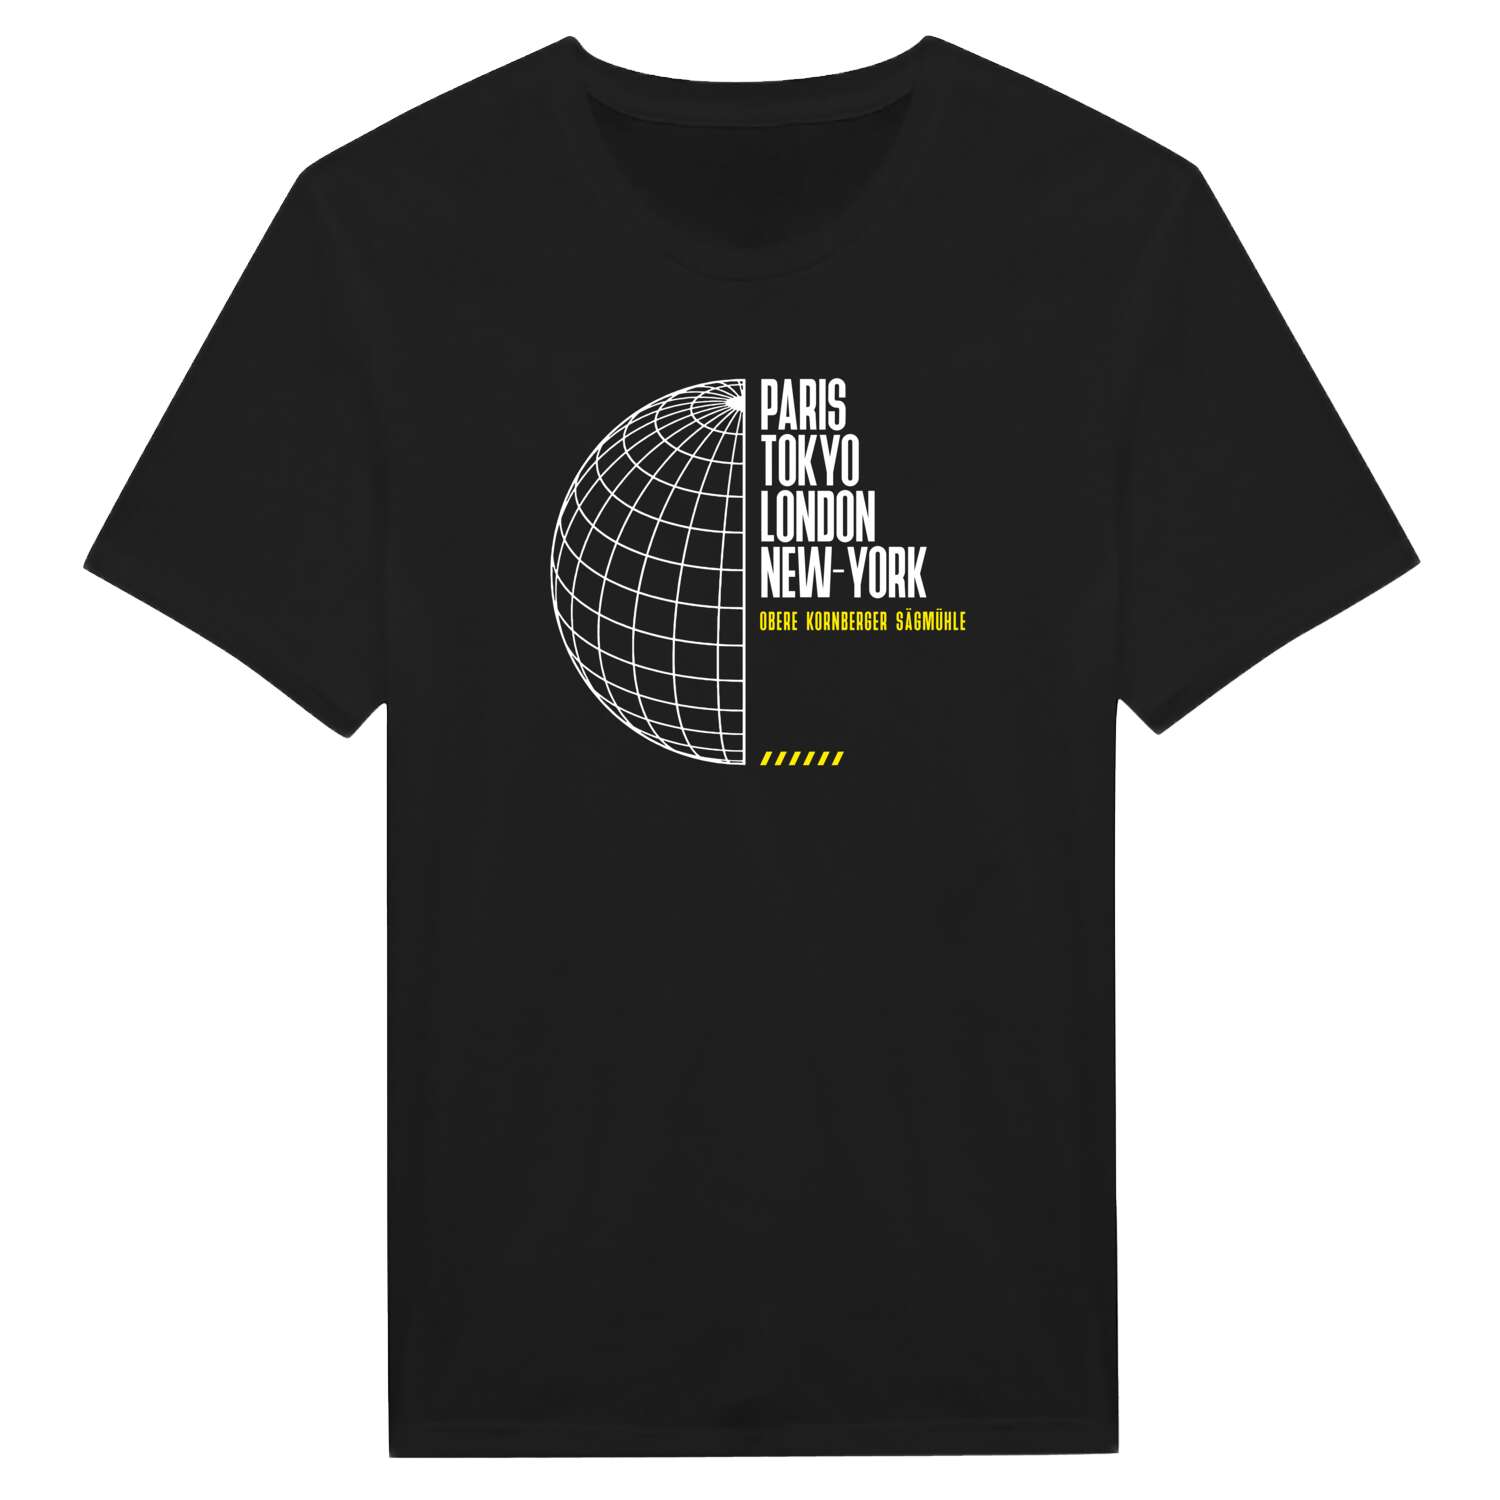 Obere Kornberger Sägmühle T-Shirt »Paris Tokyo London«